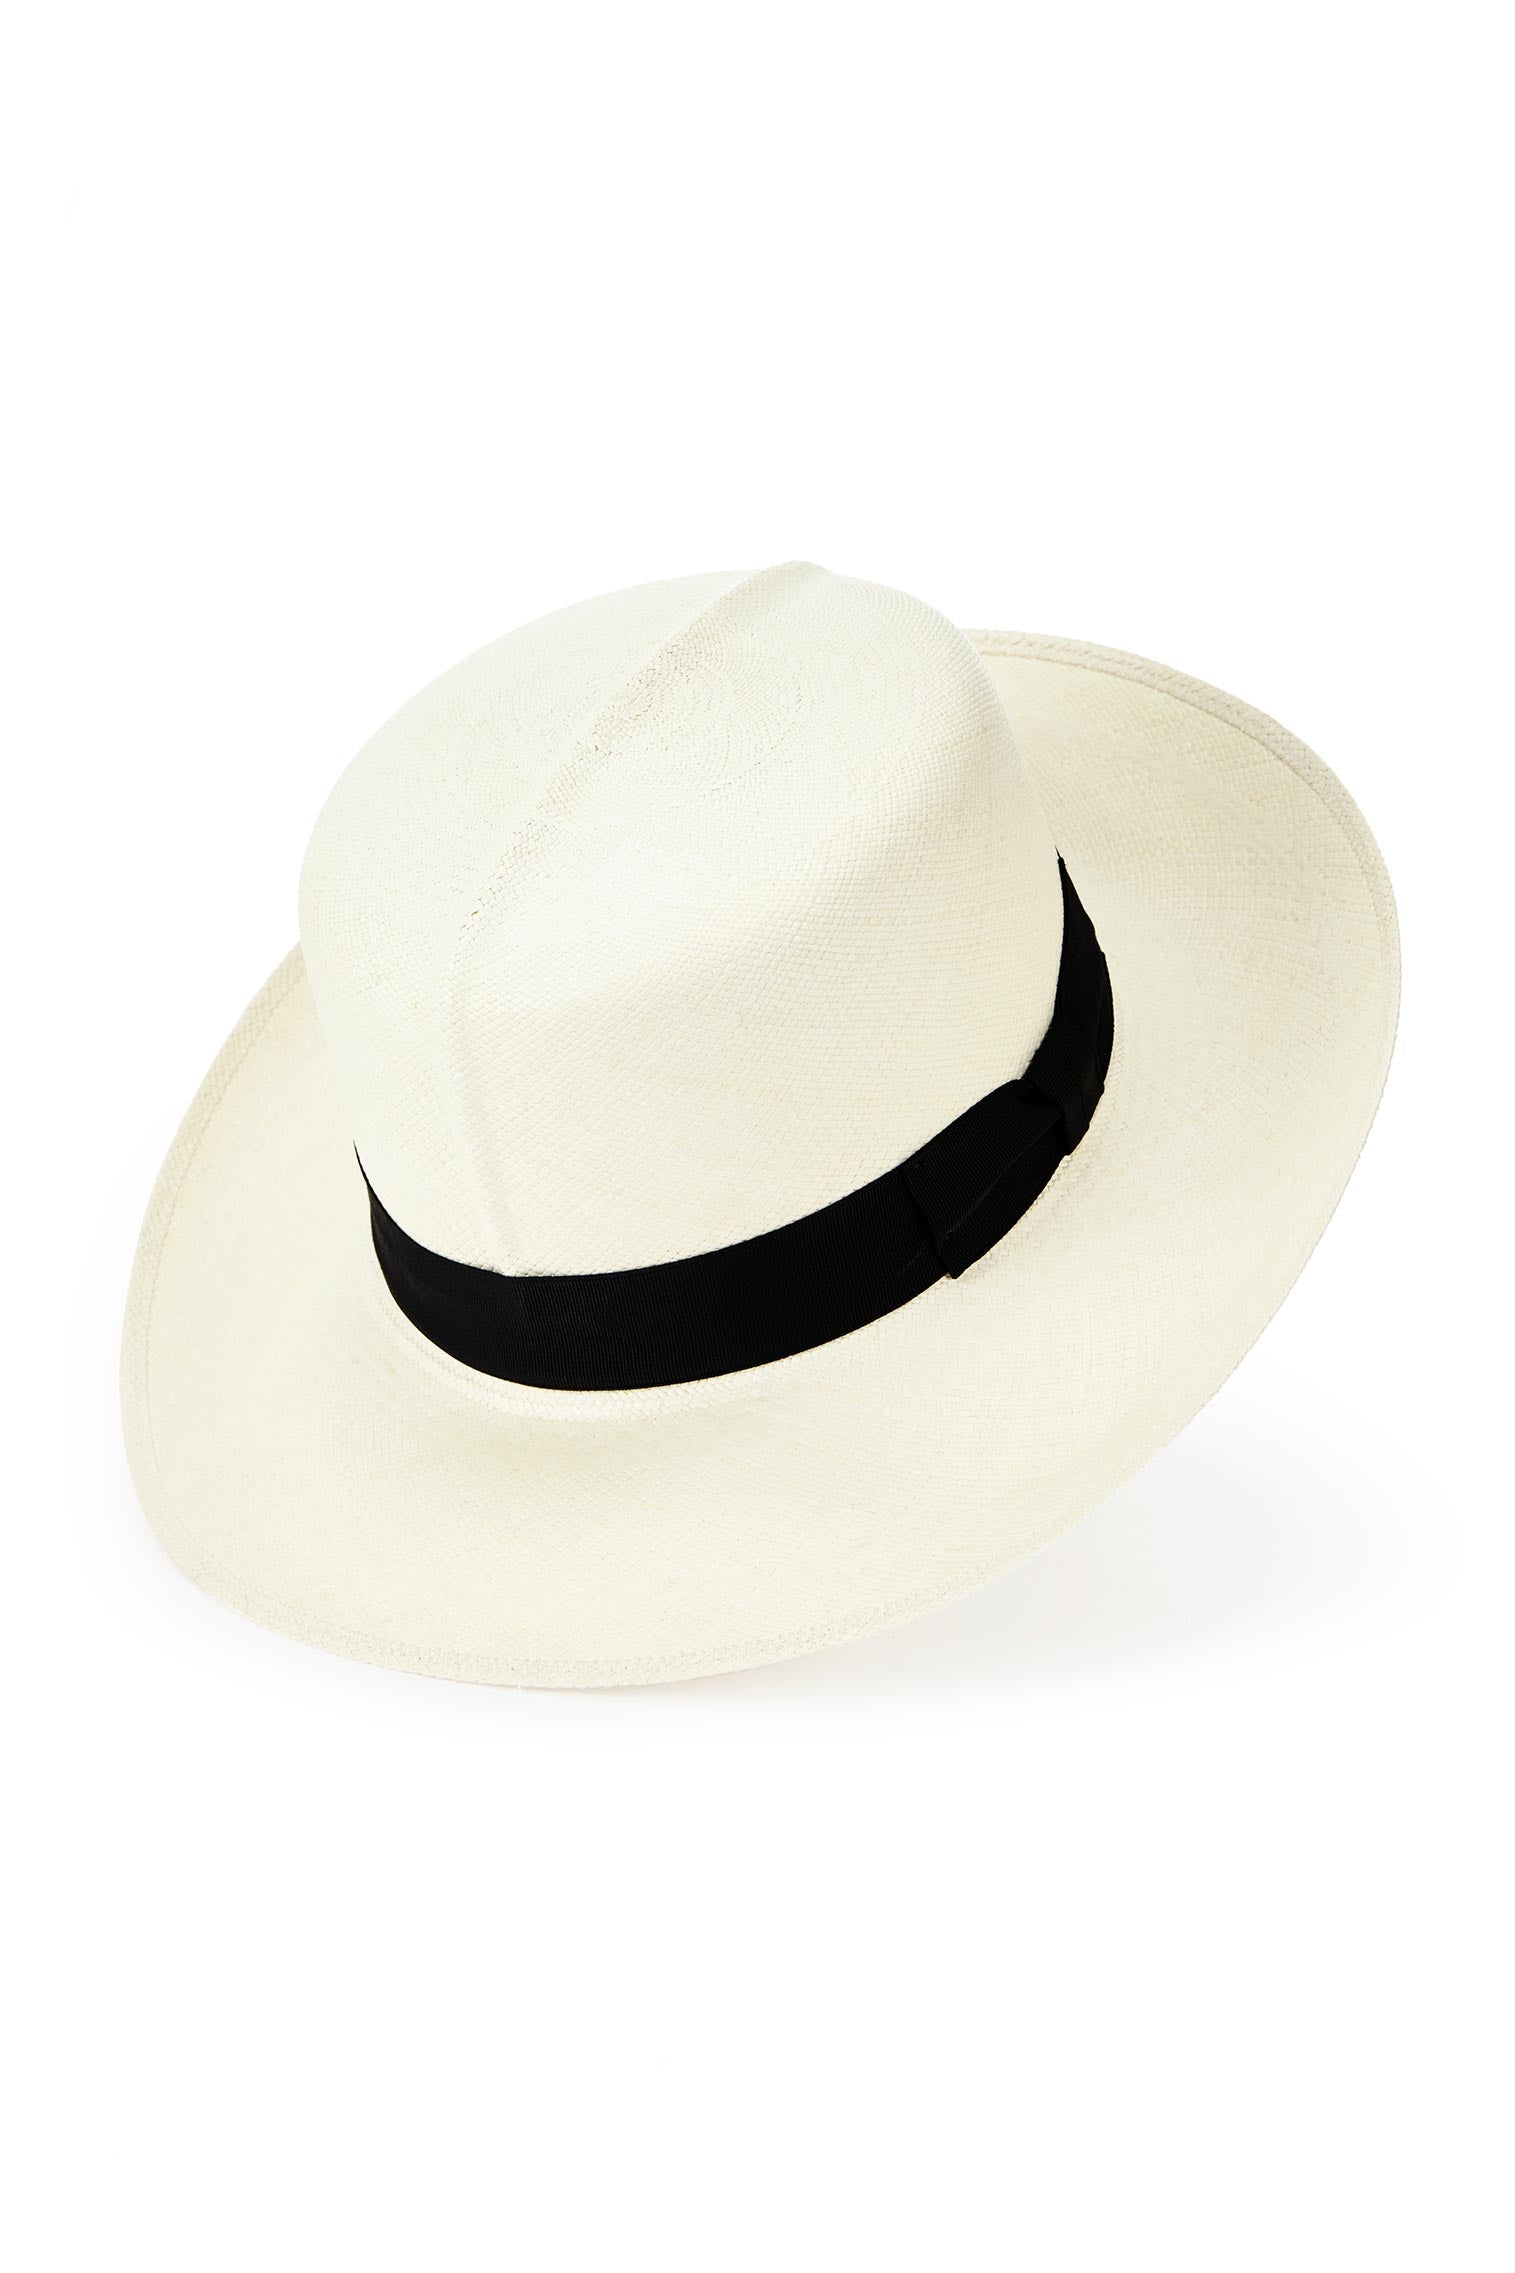 Men's Rollable Panama - Panama Hats - Lock & Co. Hatters London UK